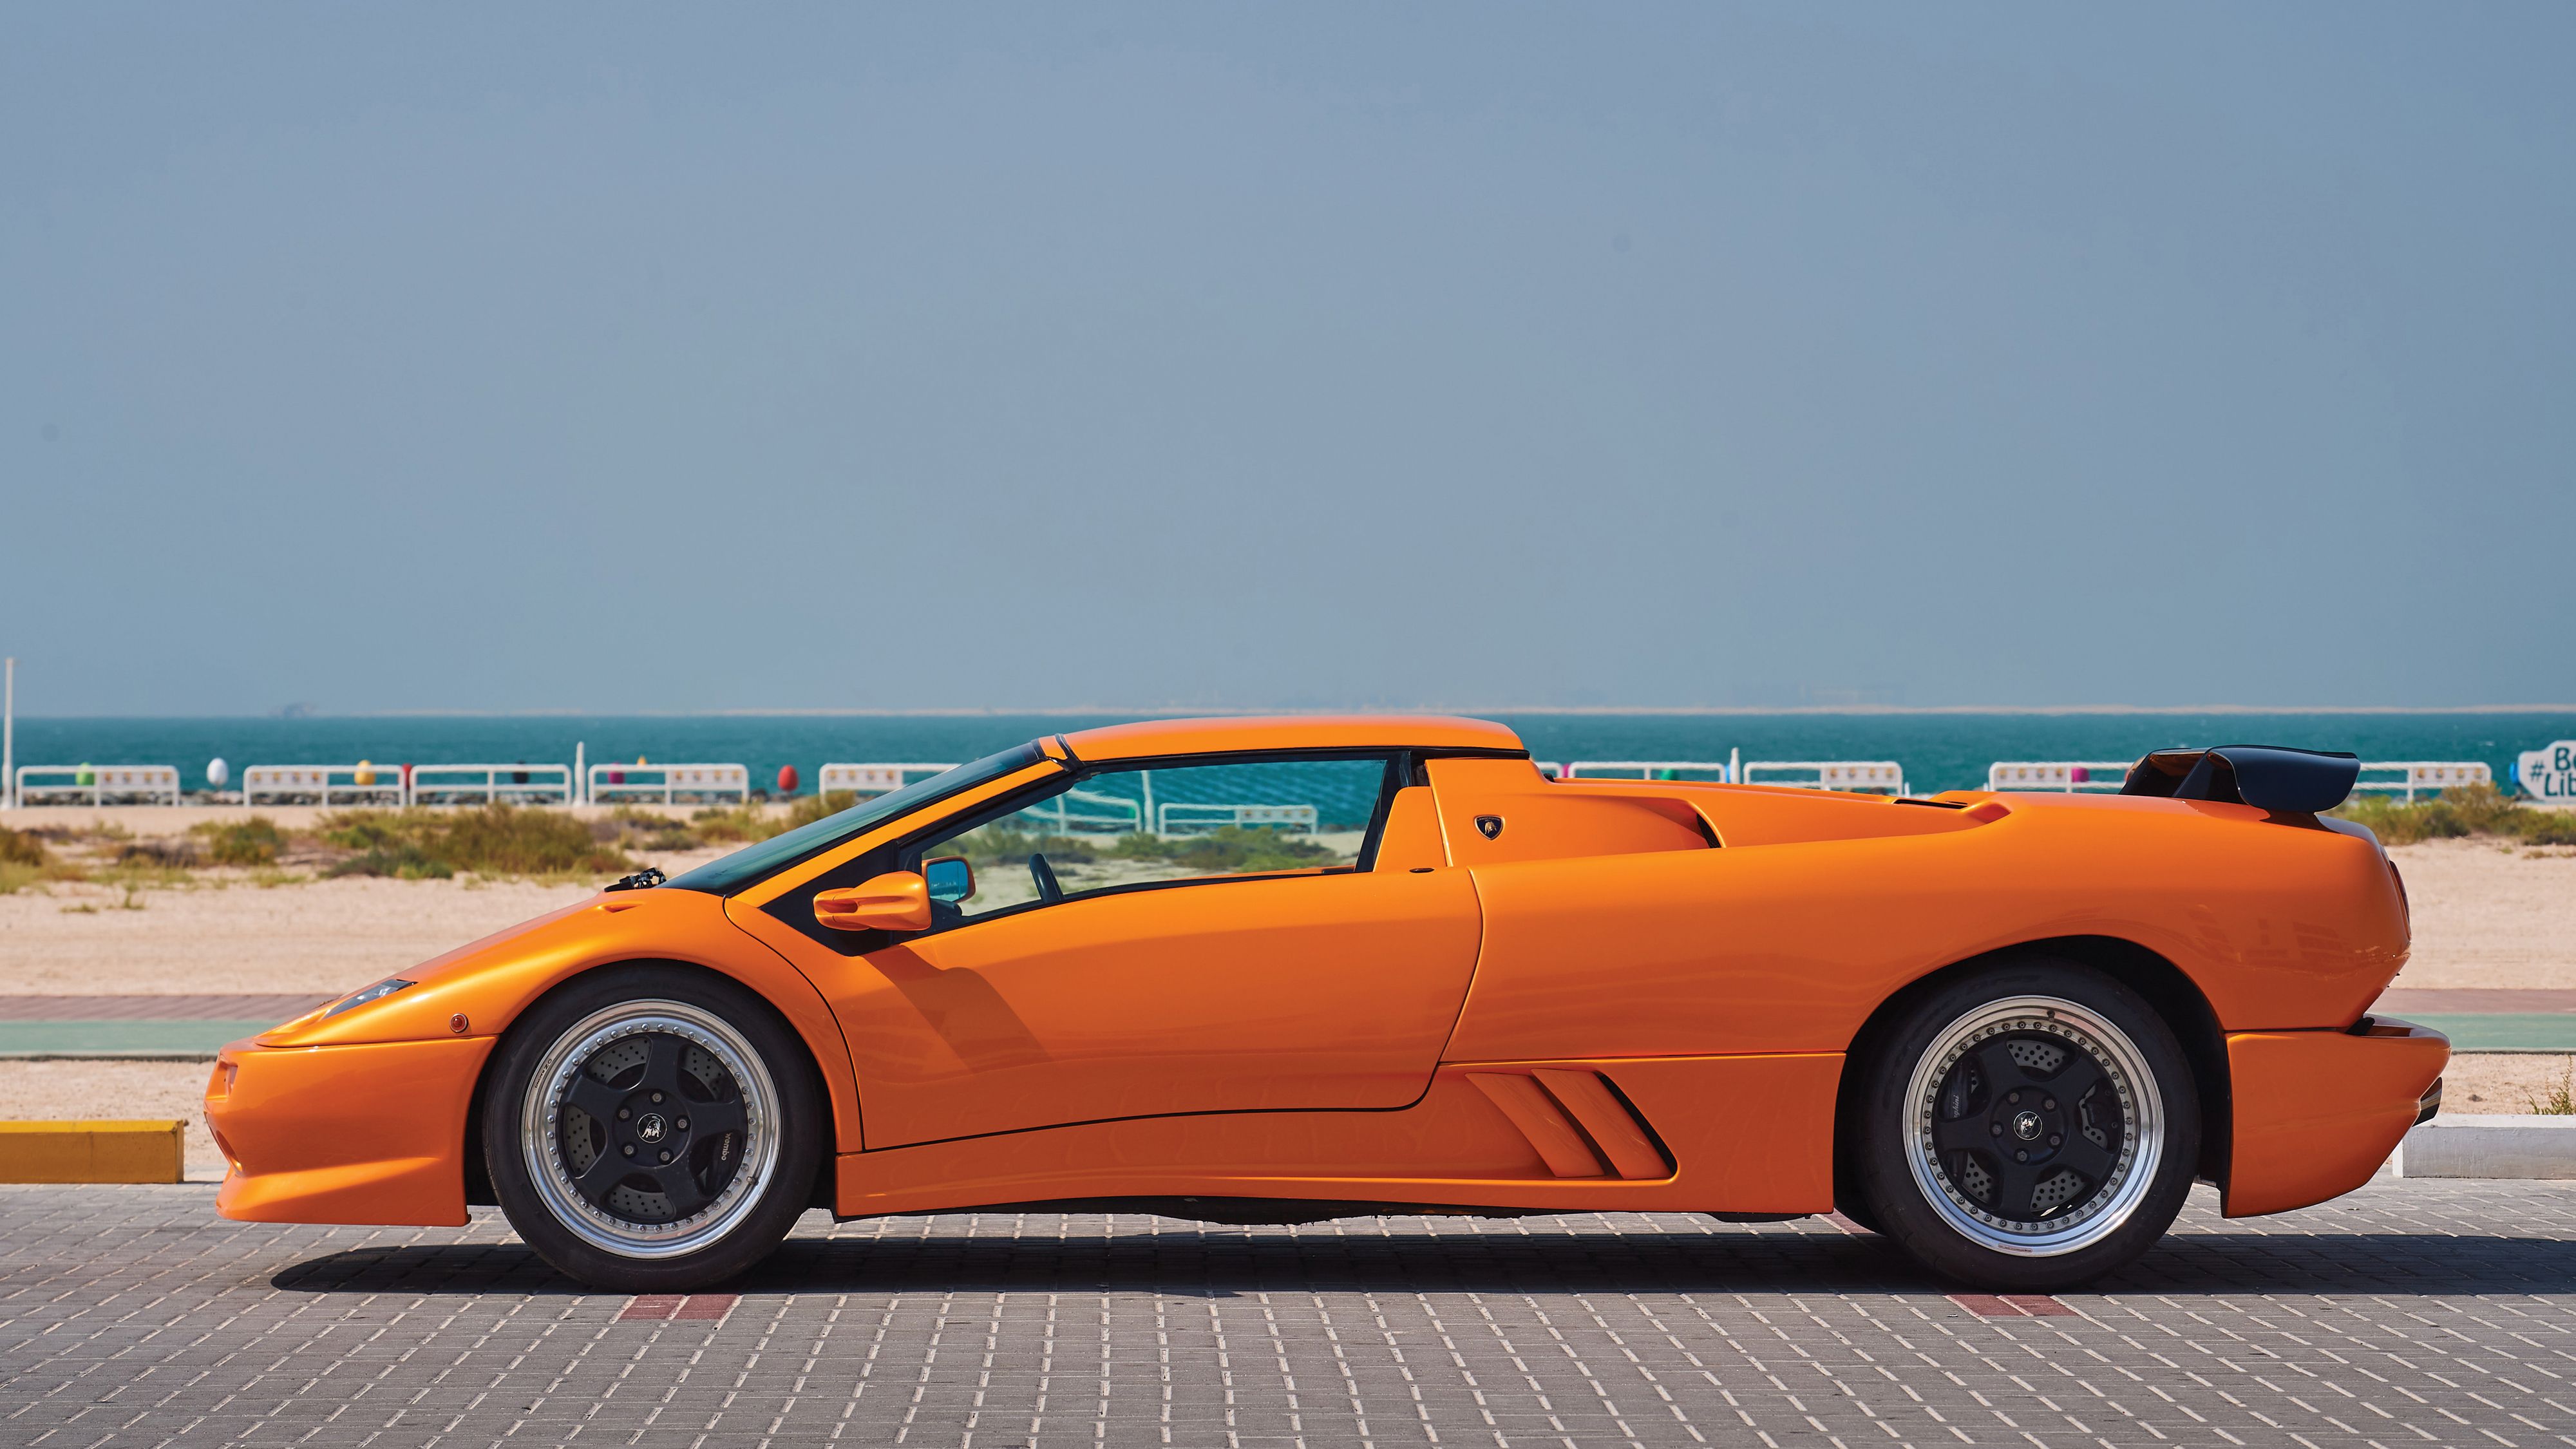 Lamborghini Lamborghini Diablo Super Car Italian Cars Roadster Orange Car Orange Cars Vehicle 4000x2250